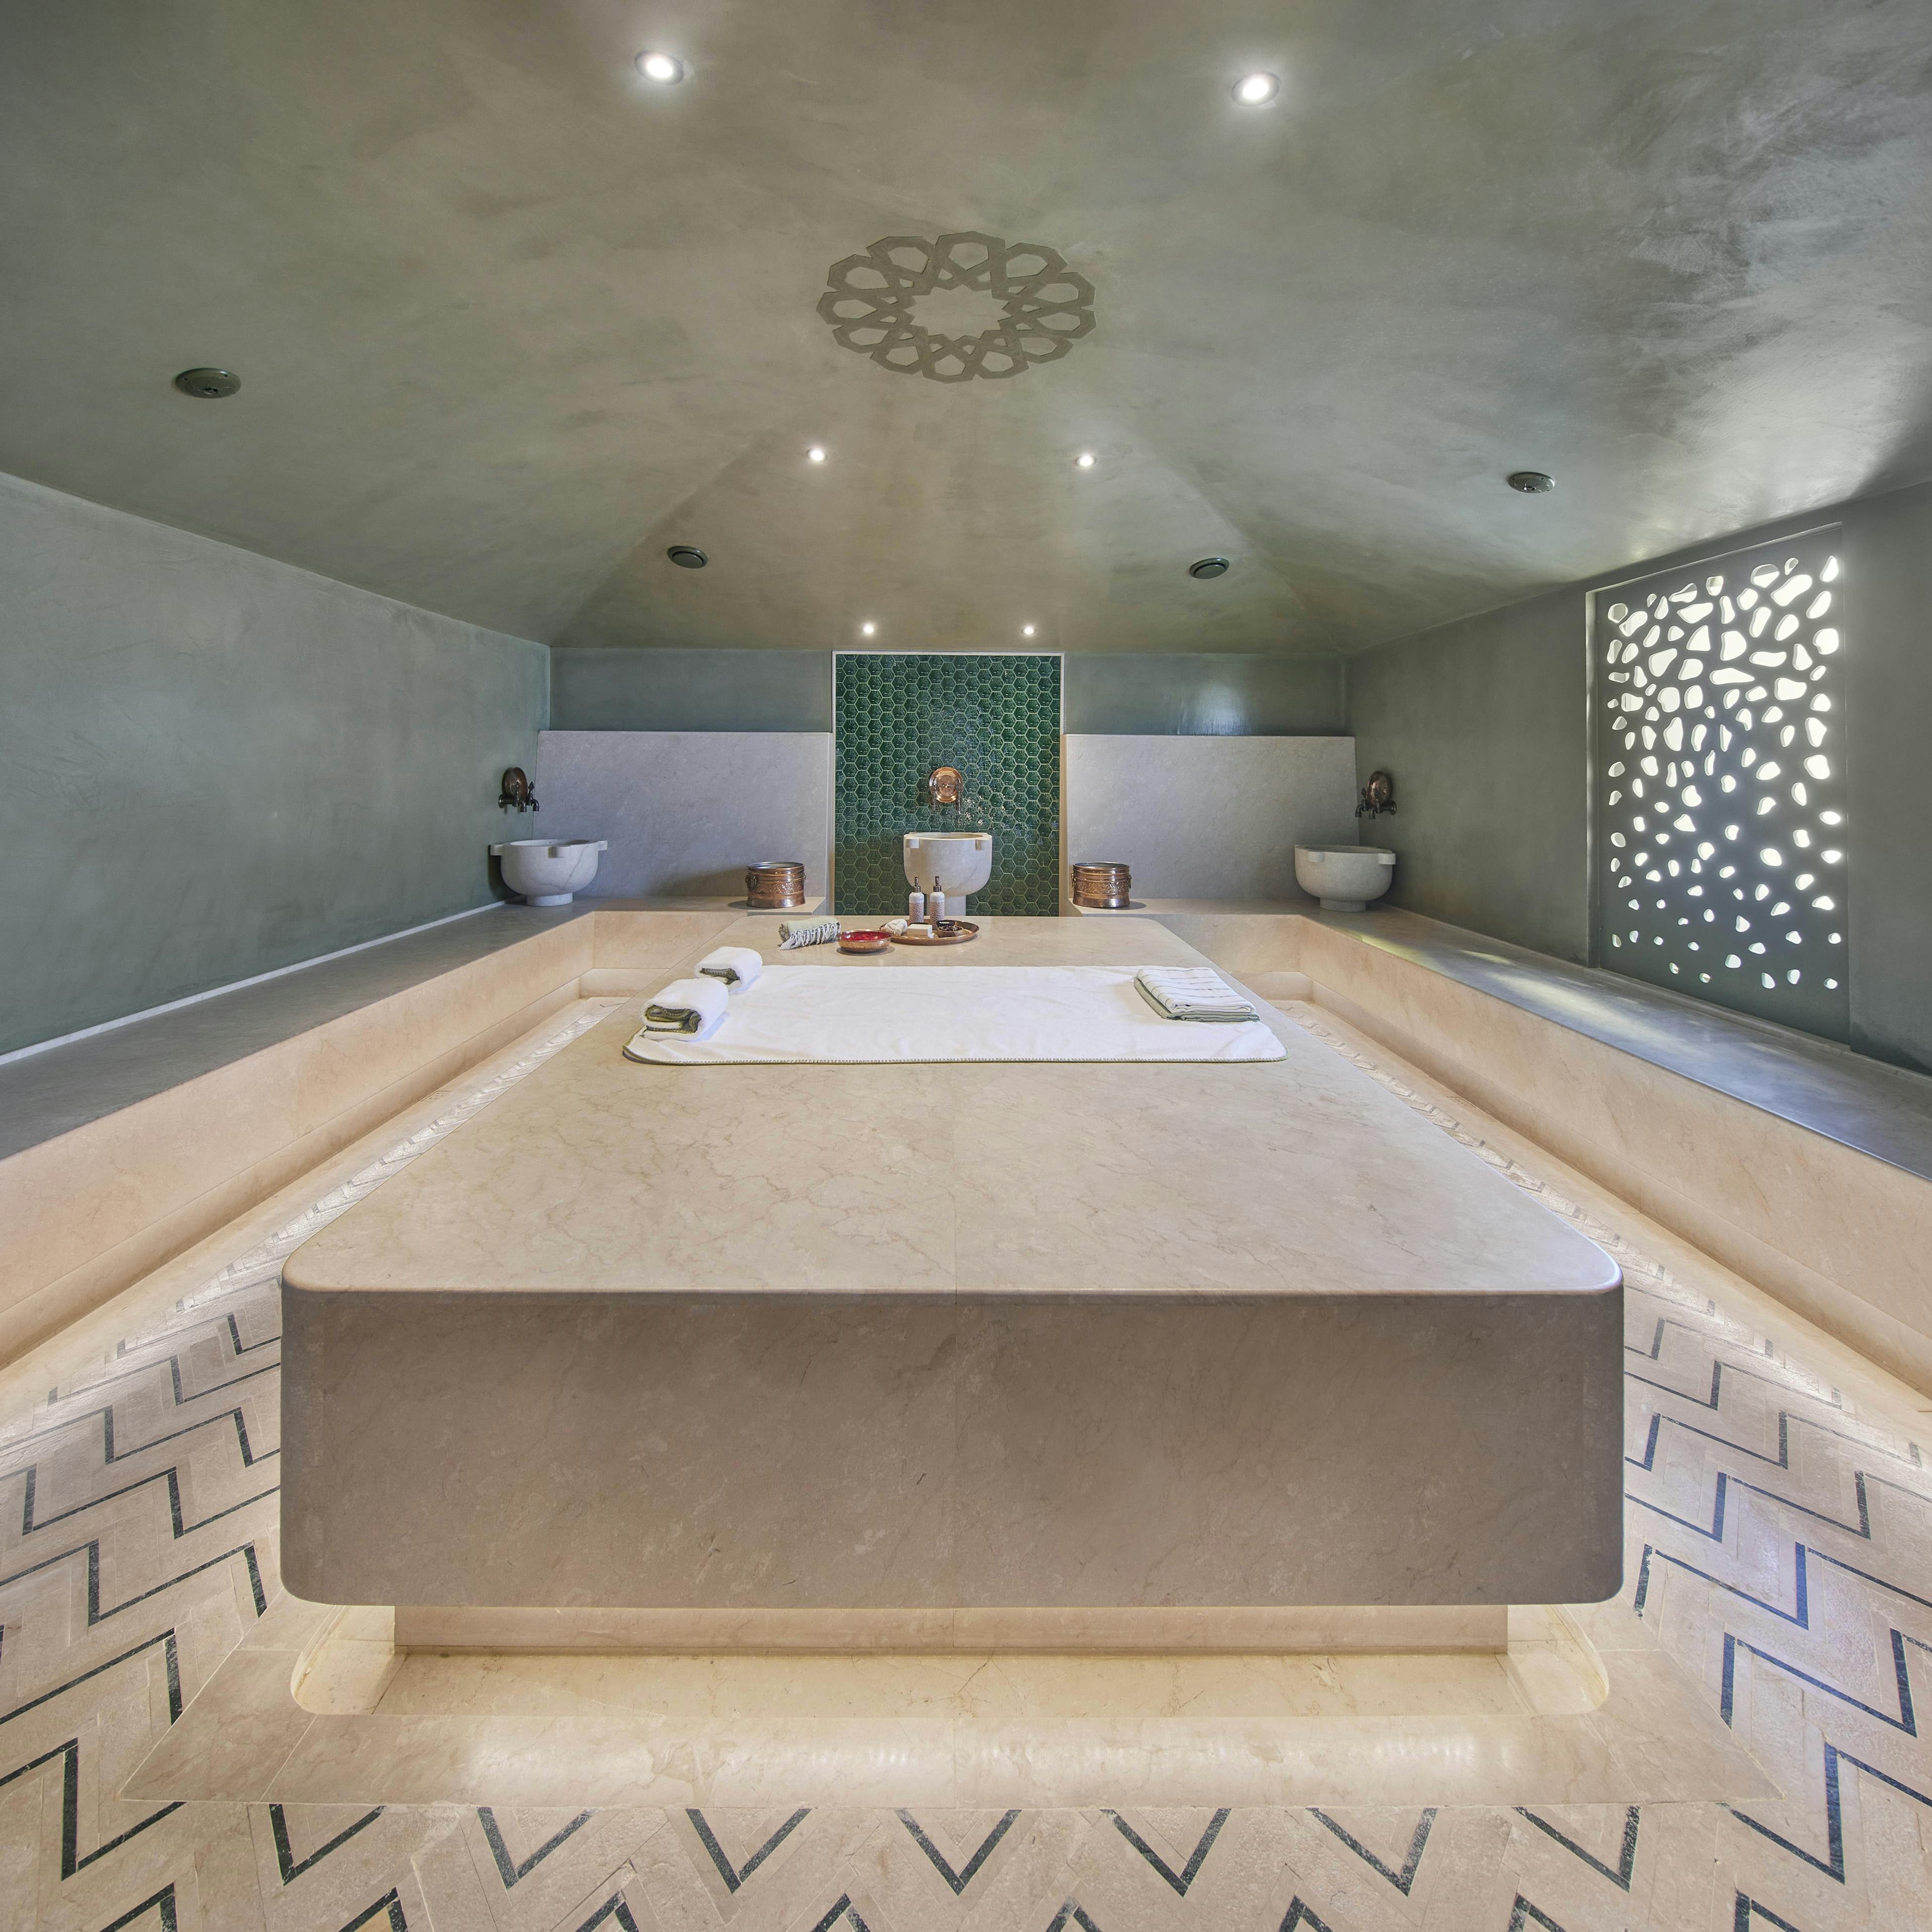 floor flooring indoors interior design tub bathing